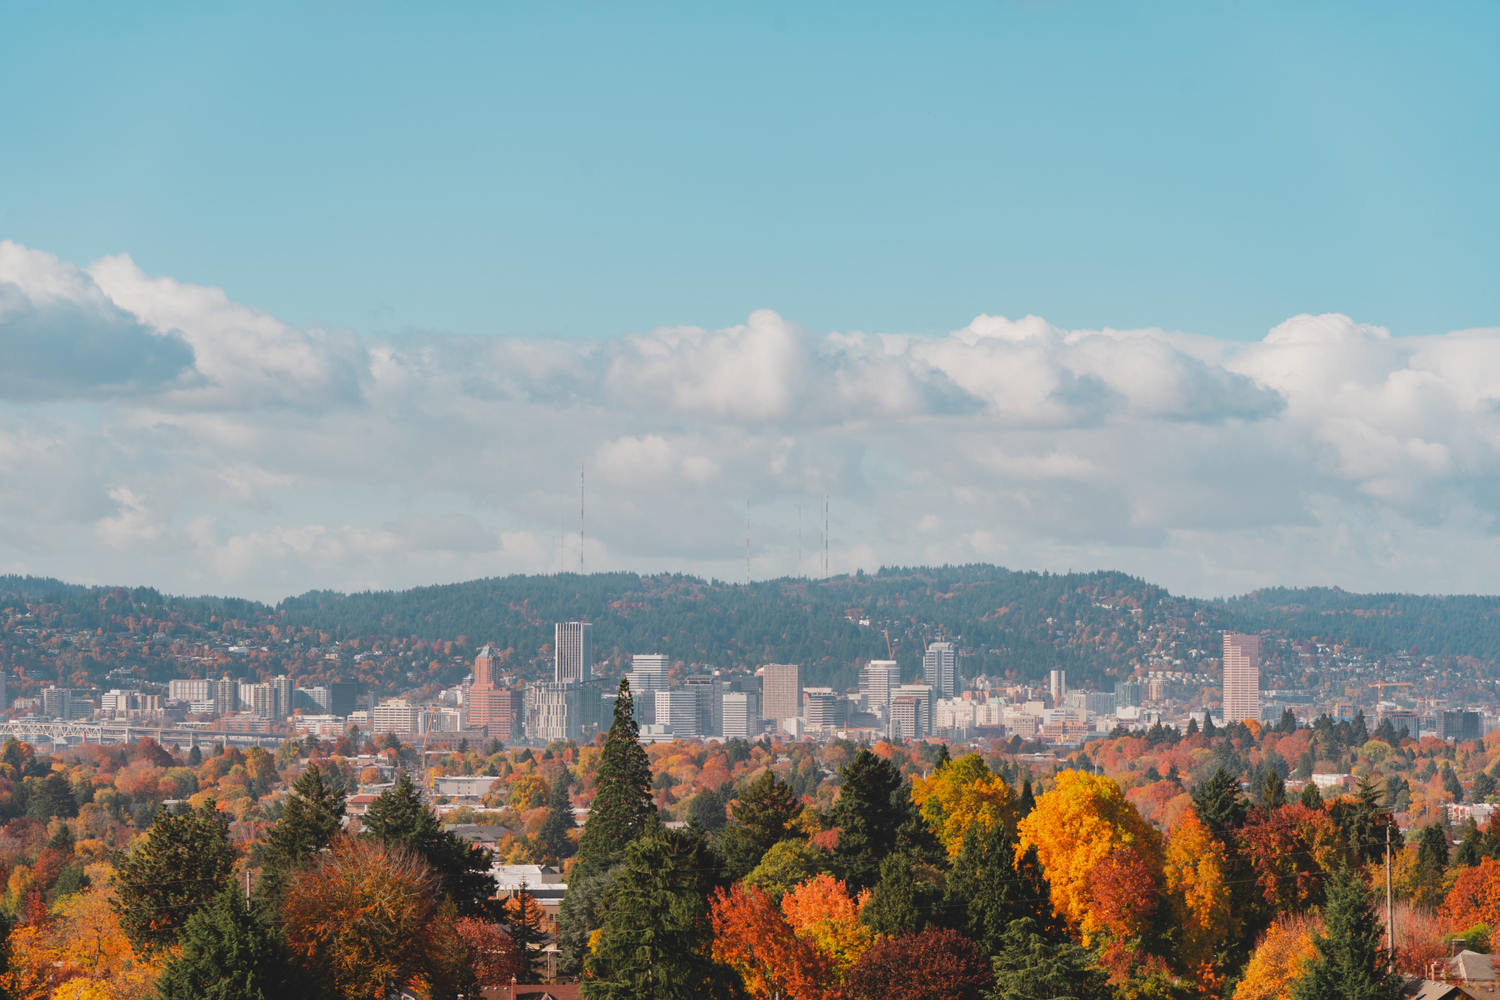 The Bike Paths of Portland